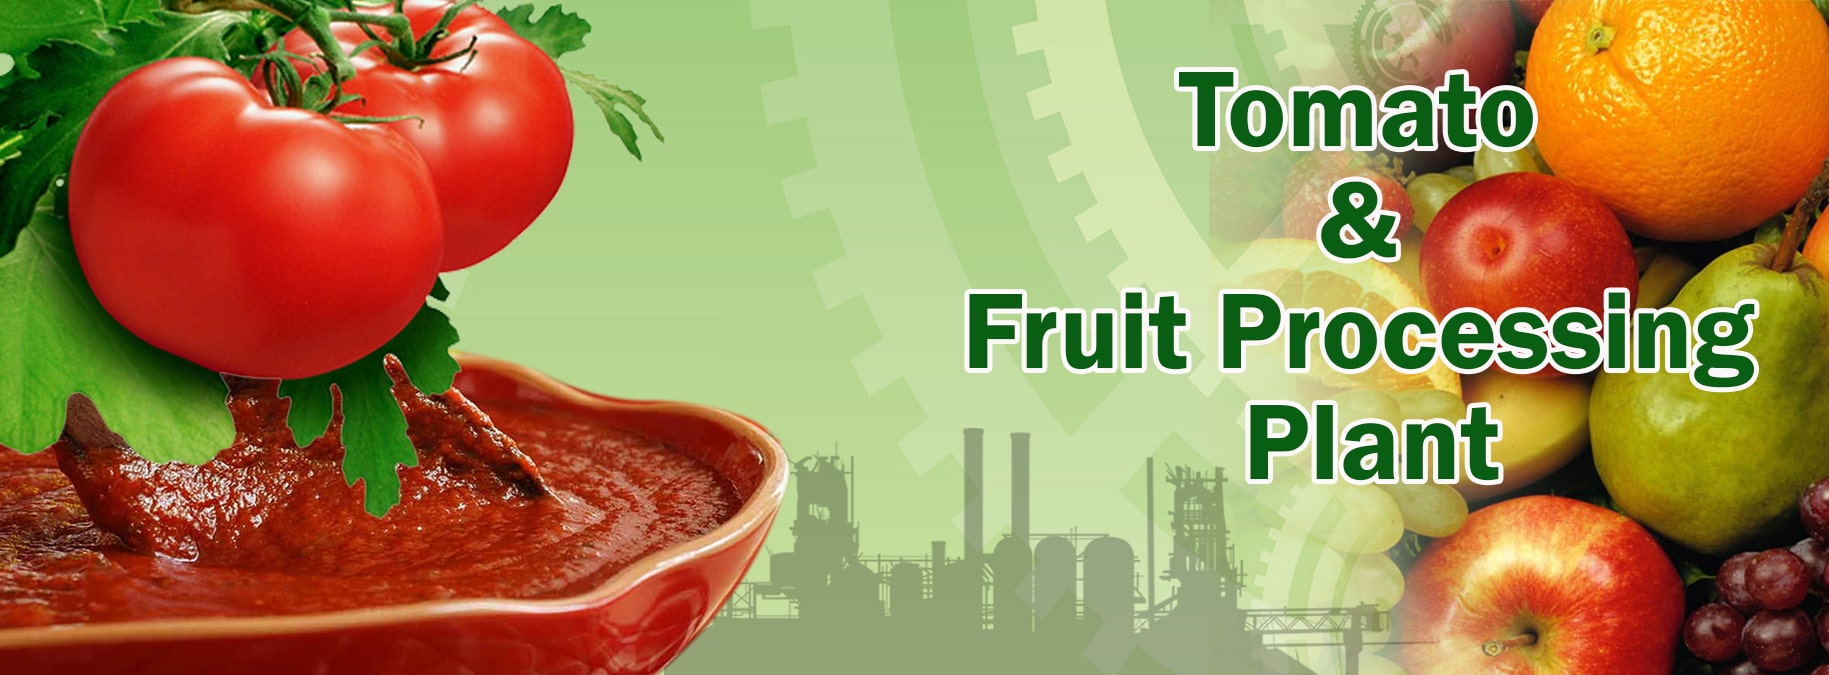 tomato fruits processing plant